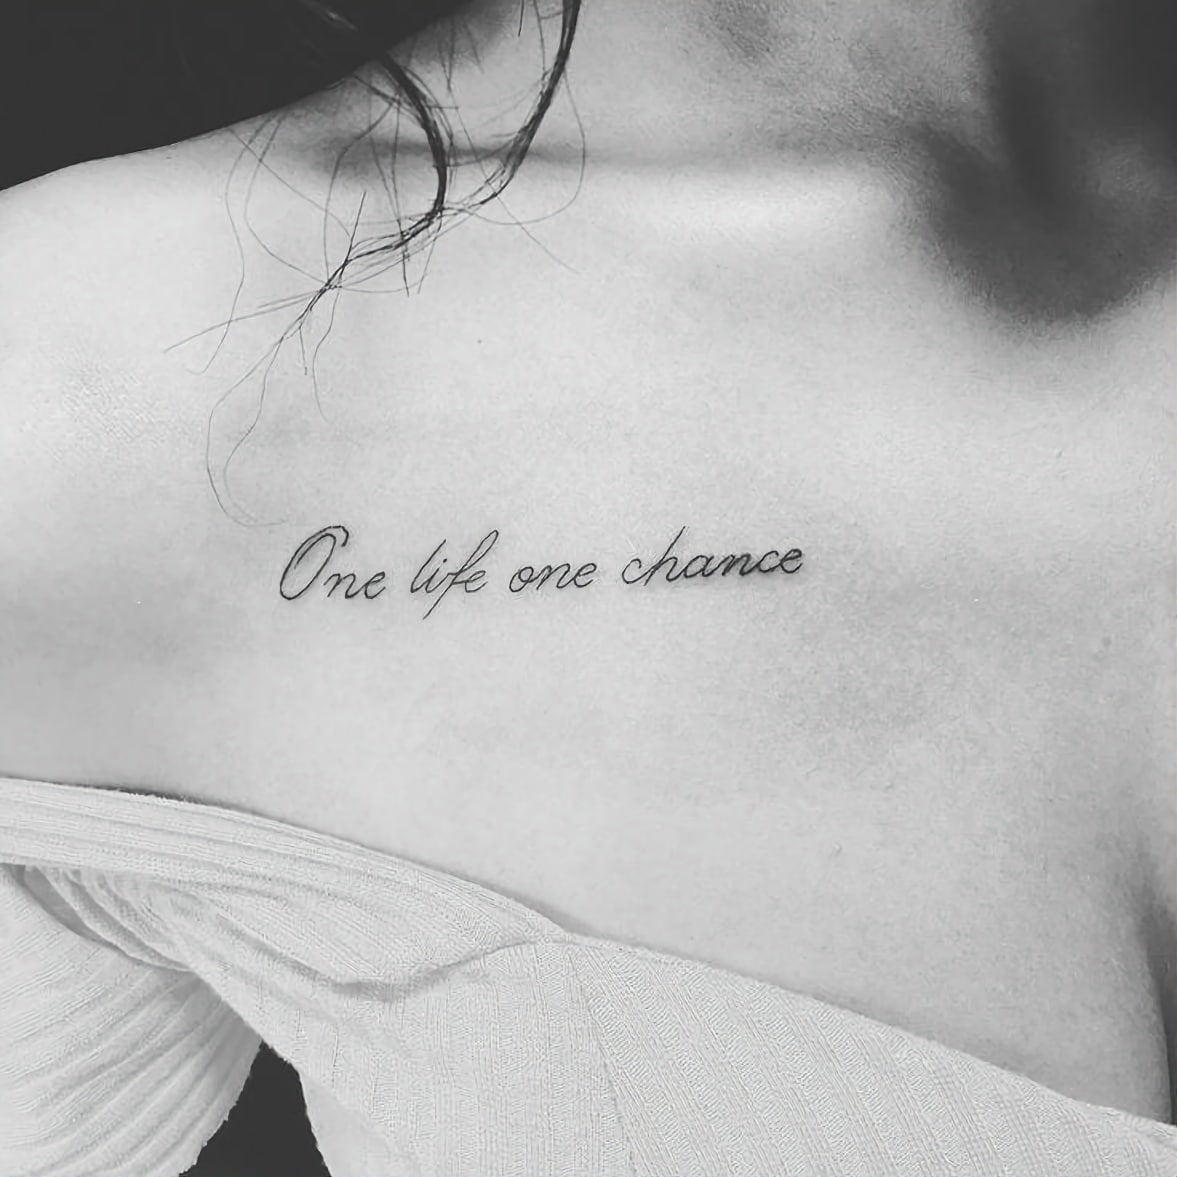 Frase para tatuarse - One life one chance